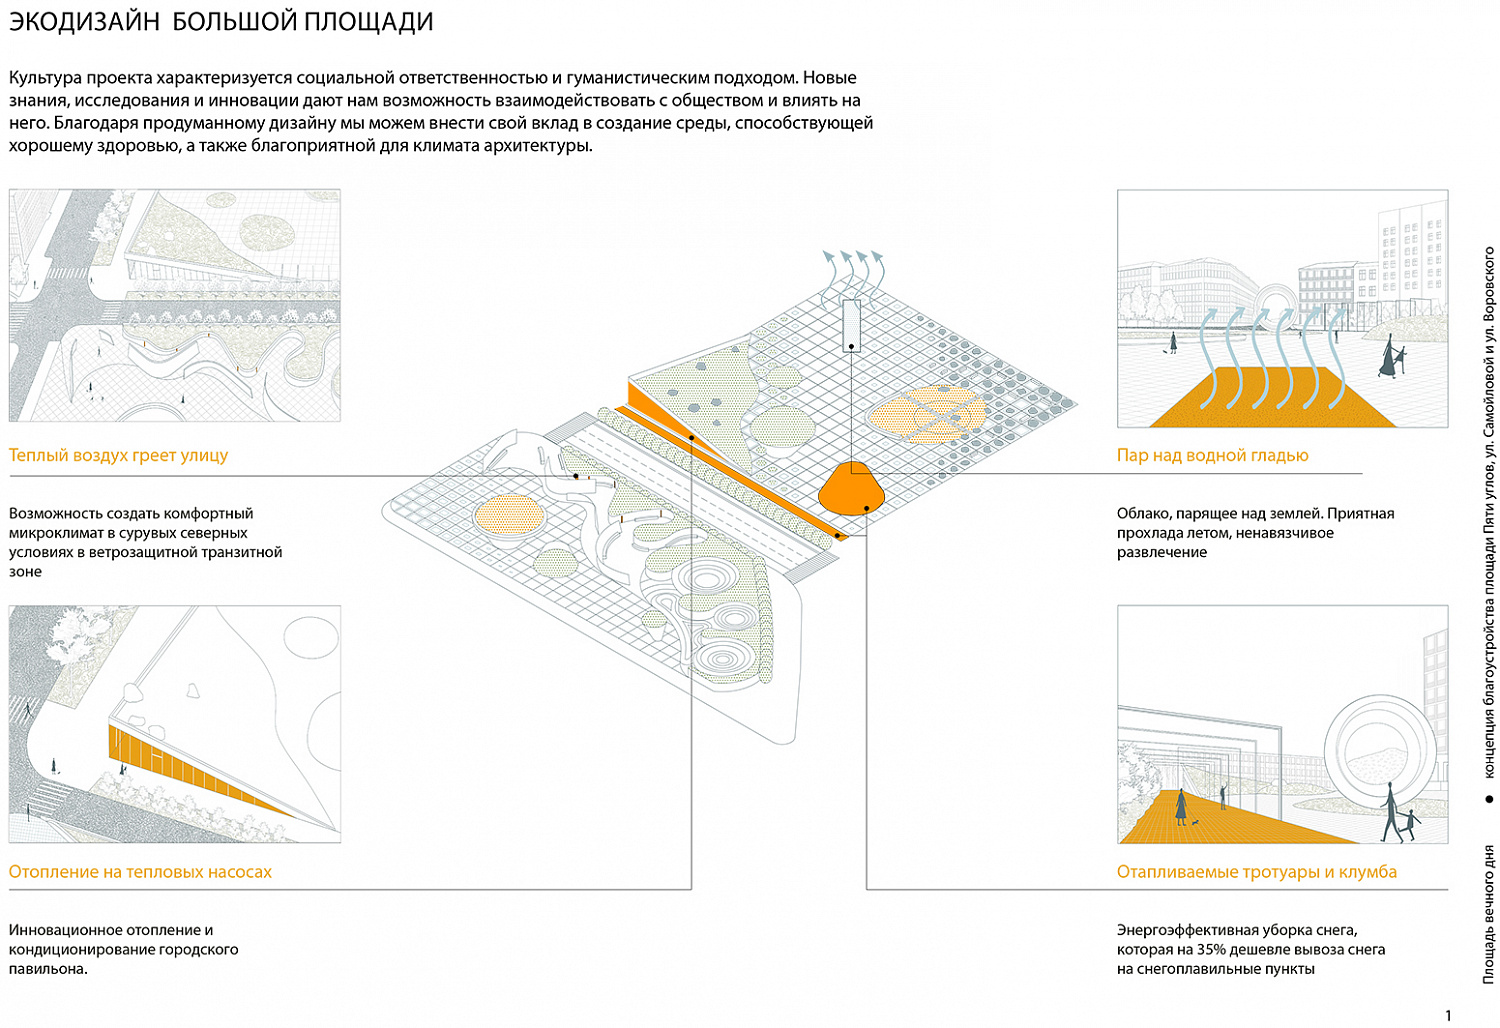 Раздел "Экологические технологии" в проекте концепции Площади в Мурманске